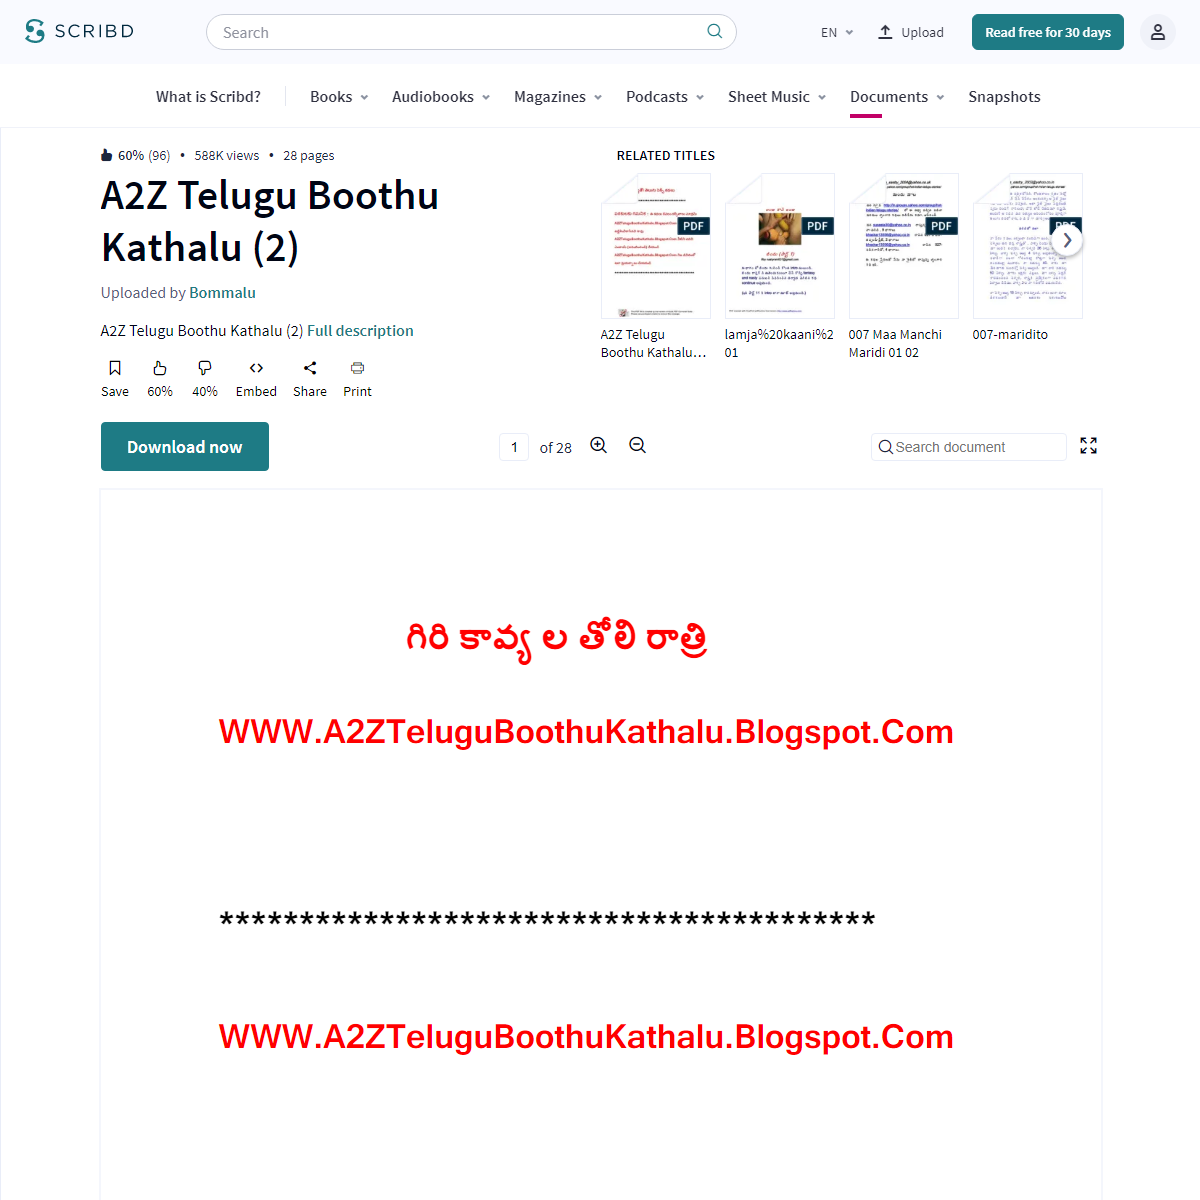 A complete backup of https://www.scribd.com/doc/279762469/A2Z-Telugu-Boothu-Kathalu-2